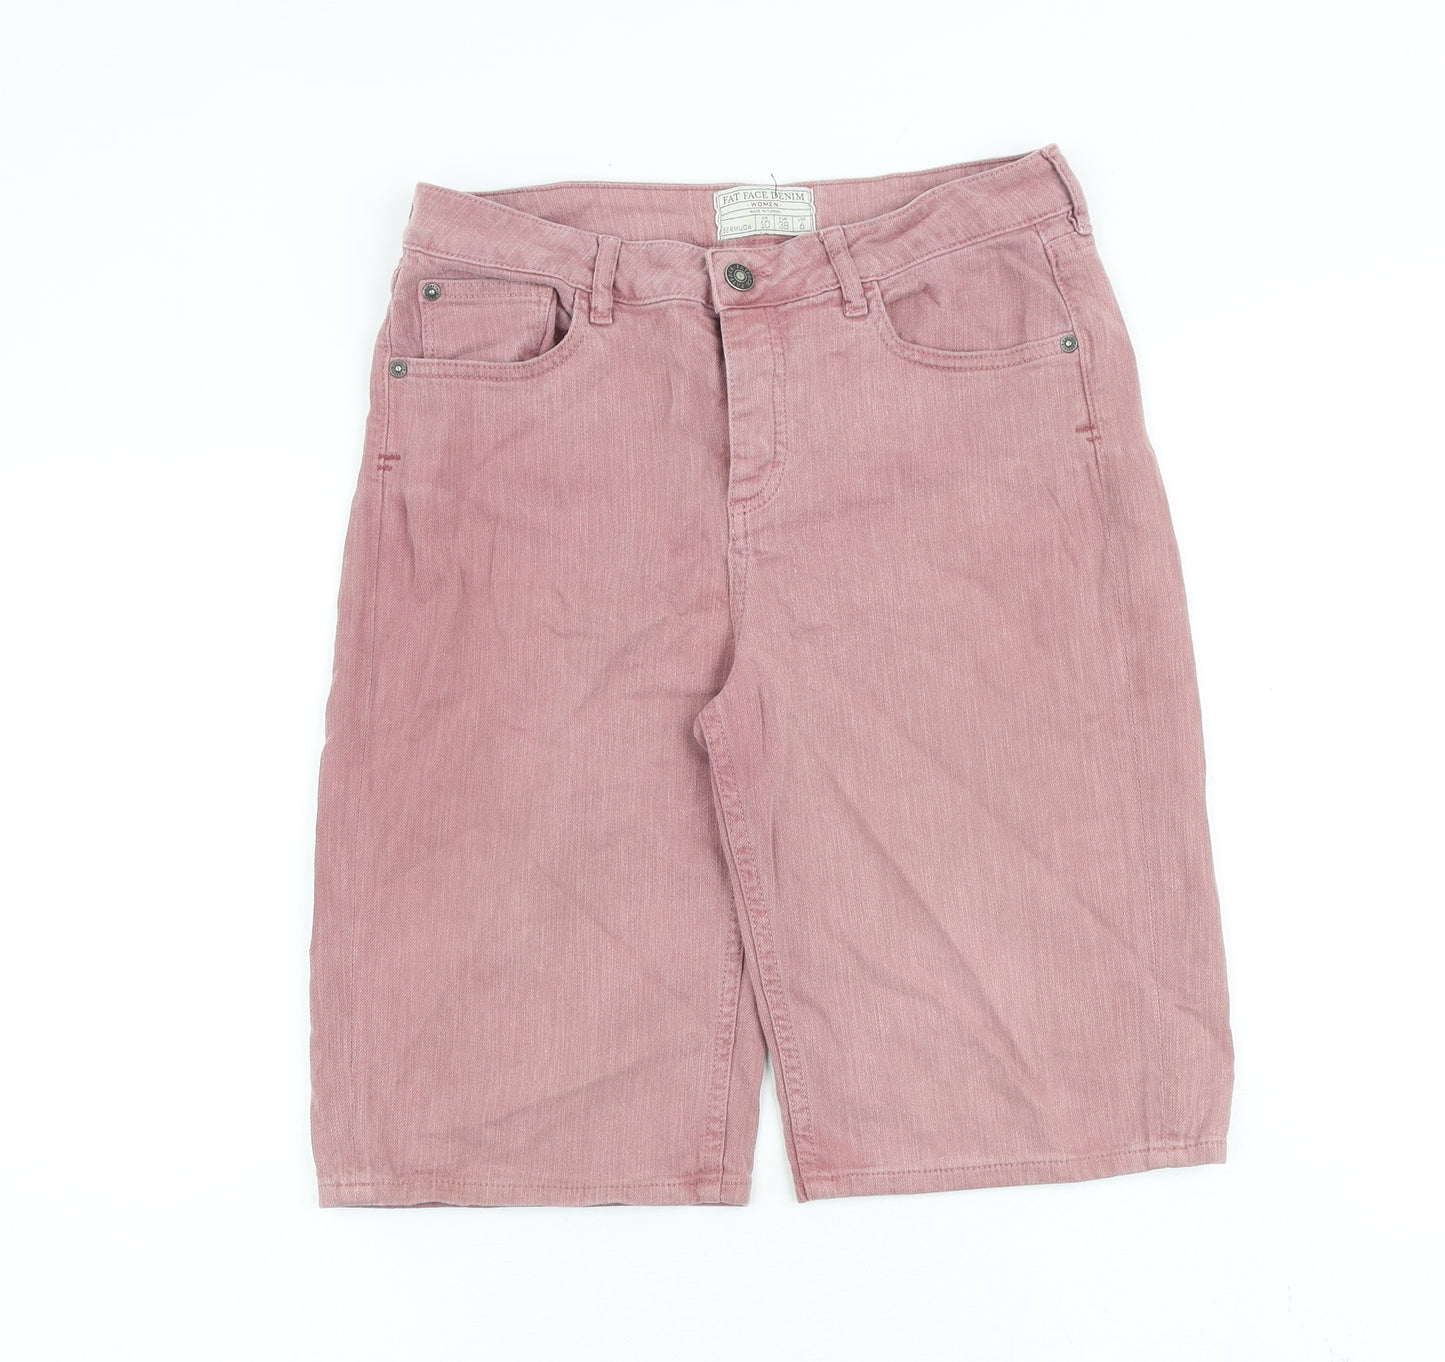 Fat Face Womens Pink Cotton Skimmer Shorts Size 10 L12 in Regular Zip